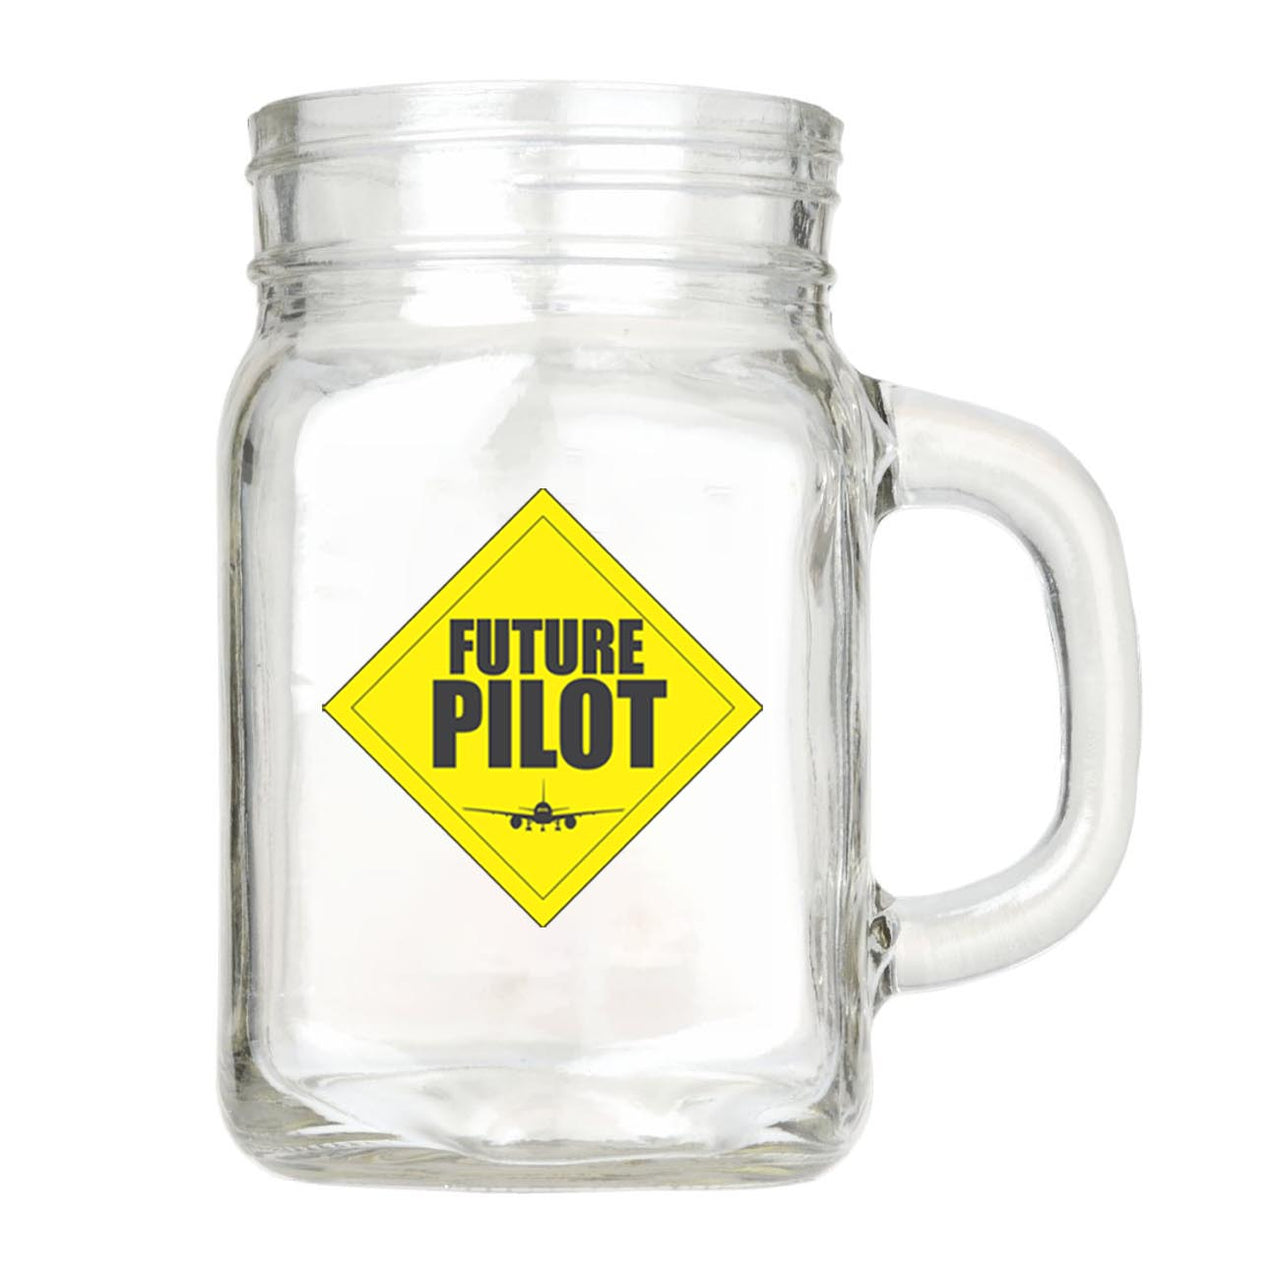 Future Pilot Designed Cocktail Glasses